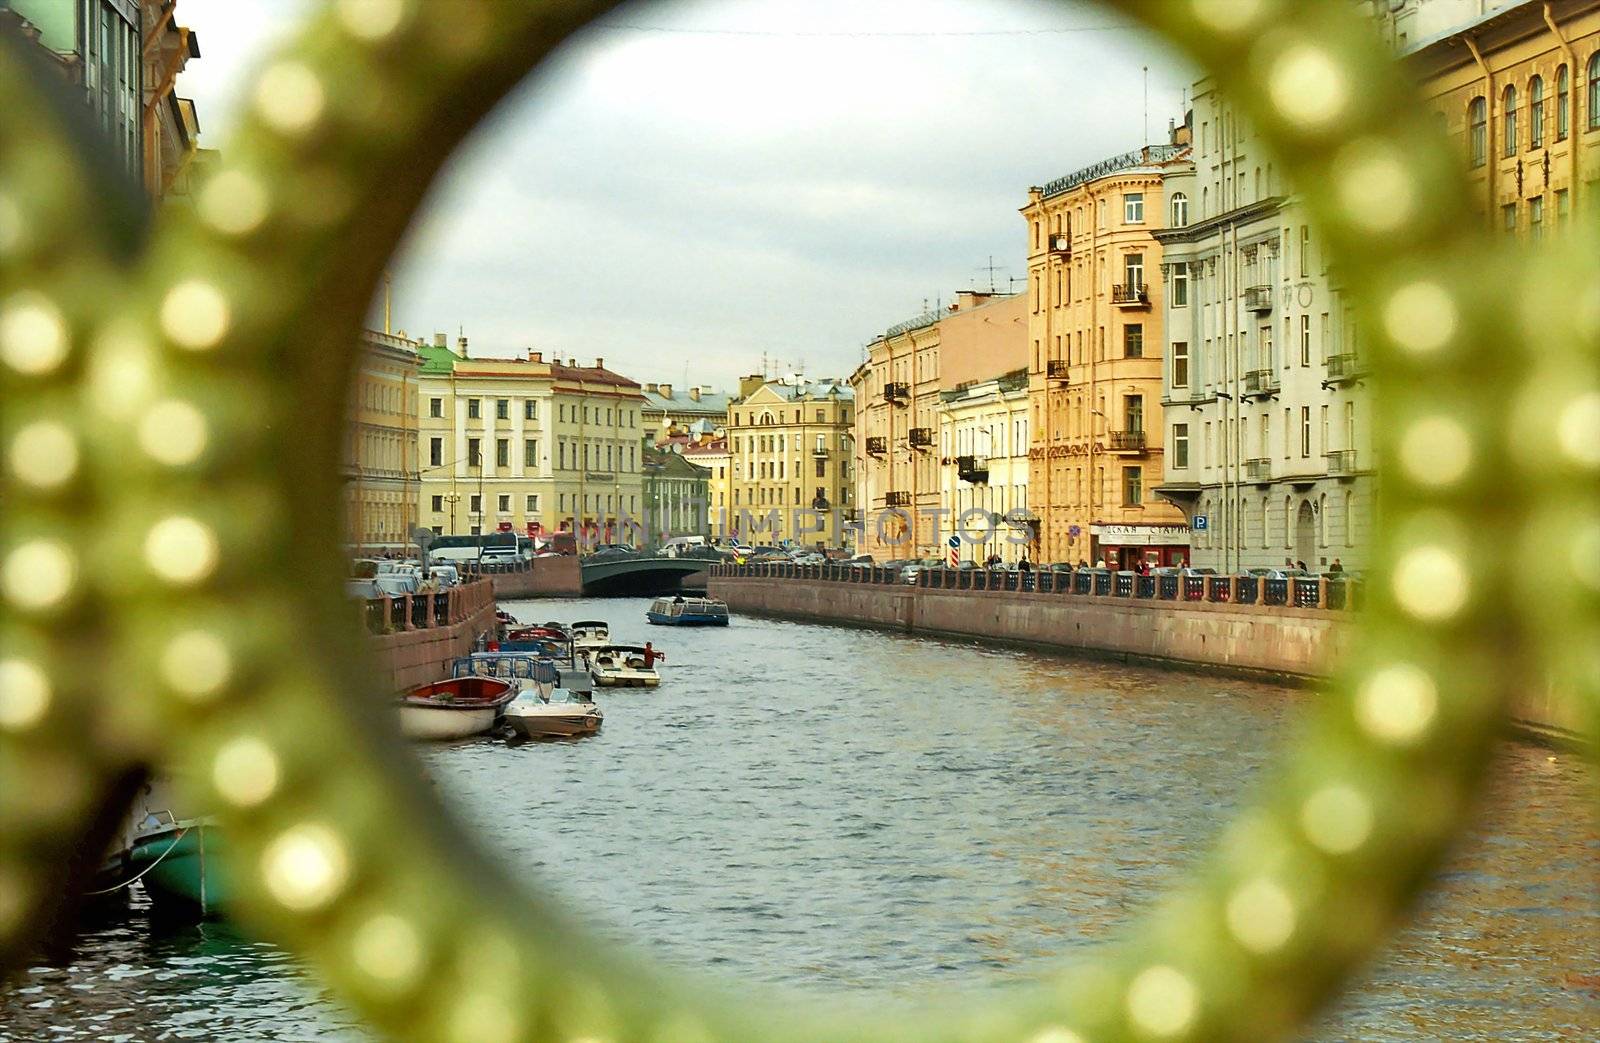 City view through the circle decoration of the bridge